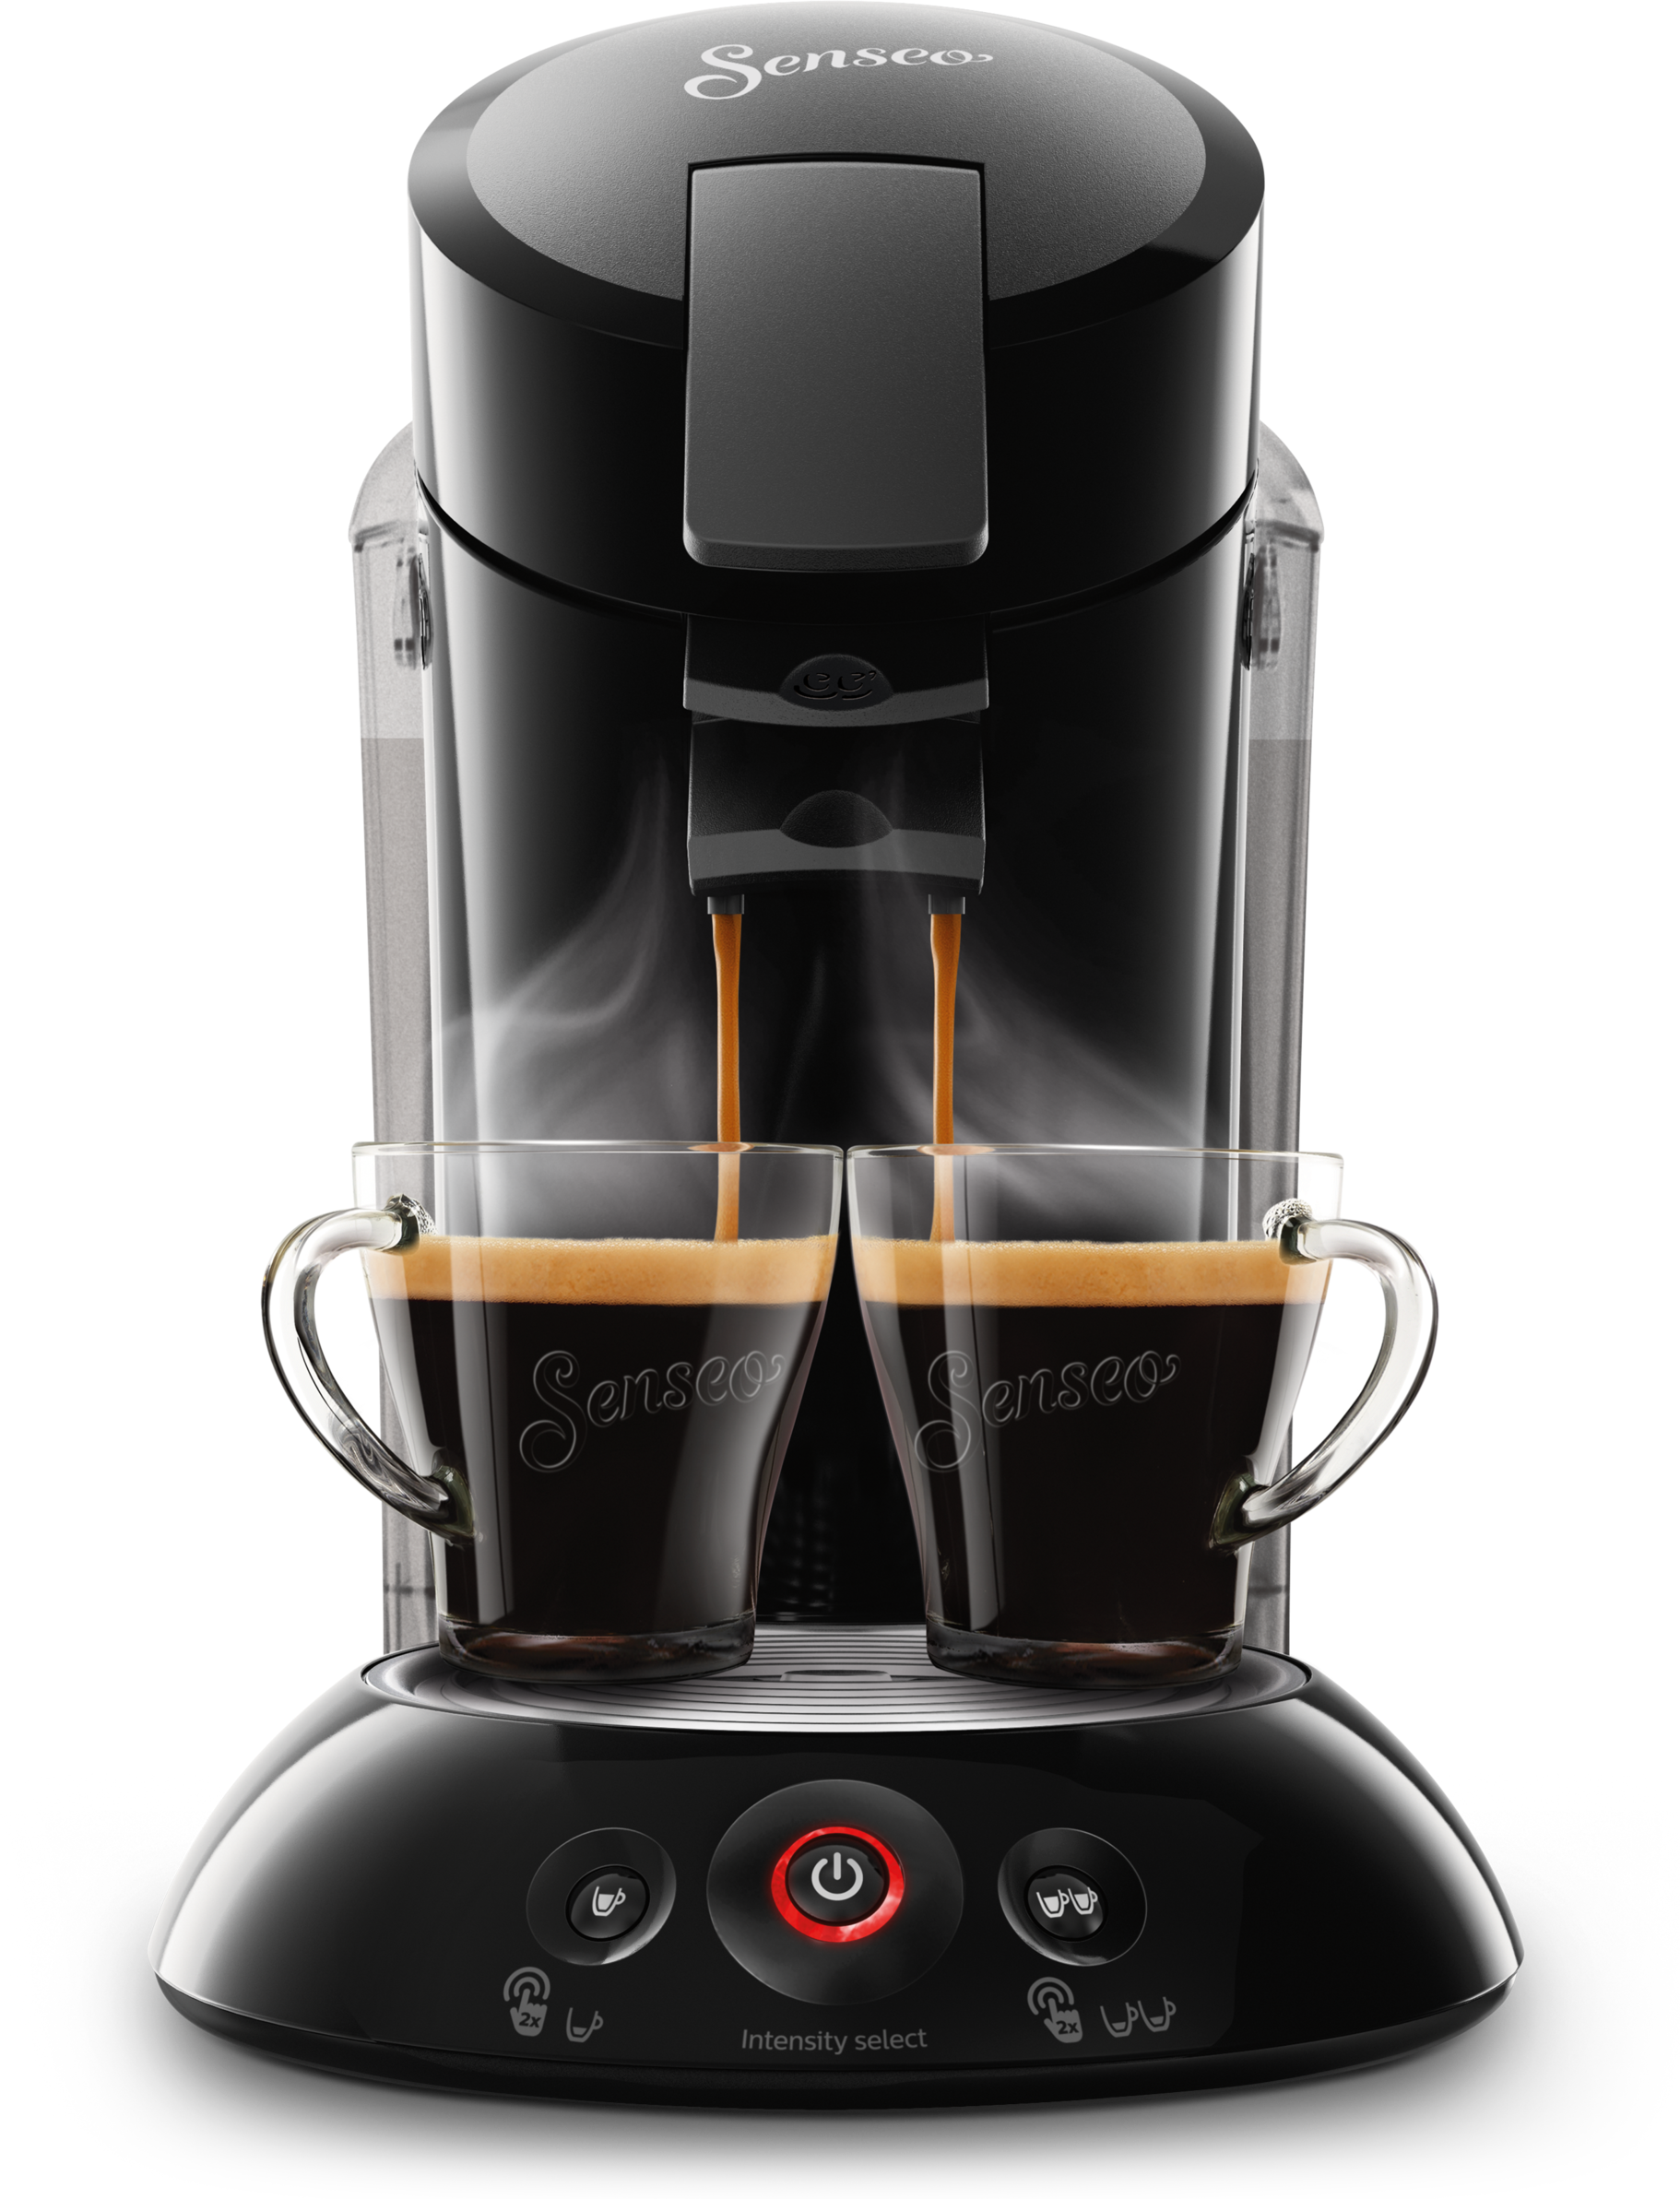 Philips Senseo CSA220 Original Plus Premium Coffee Pod Machine 220 volts  NOT FOR USA